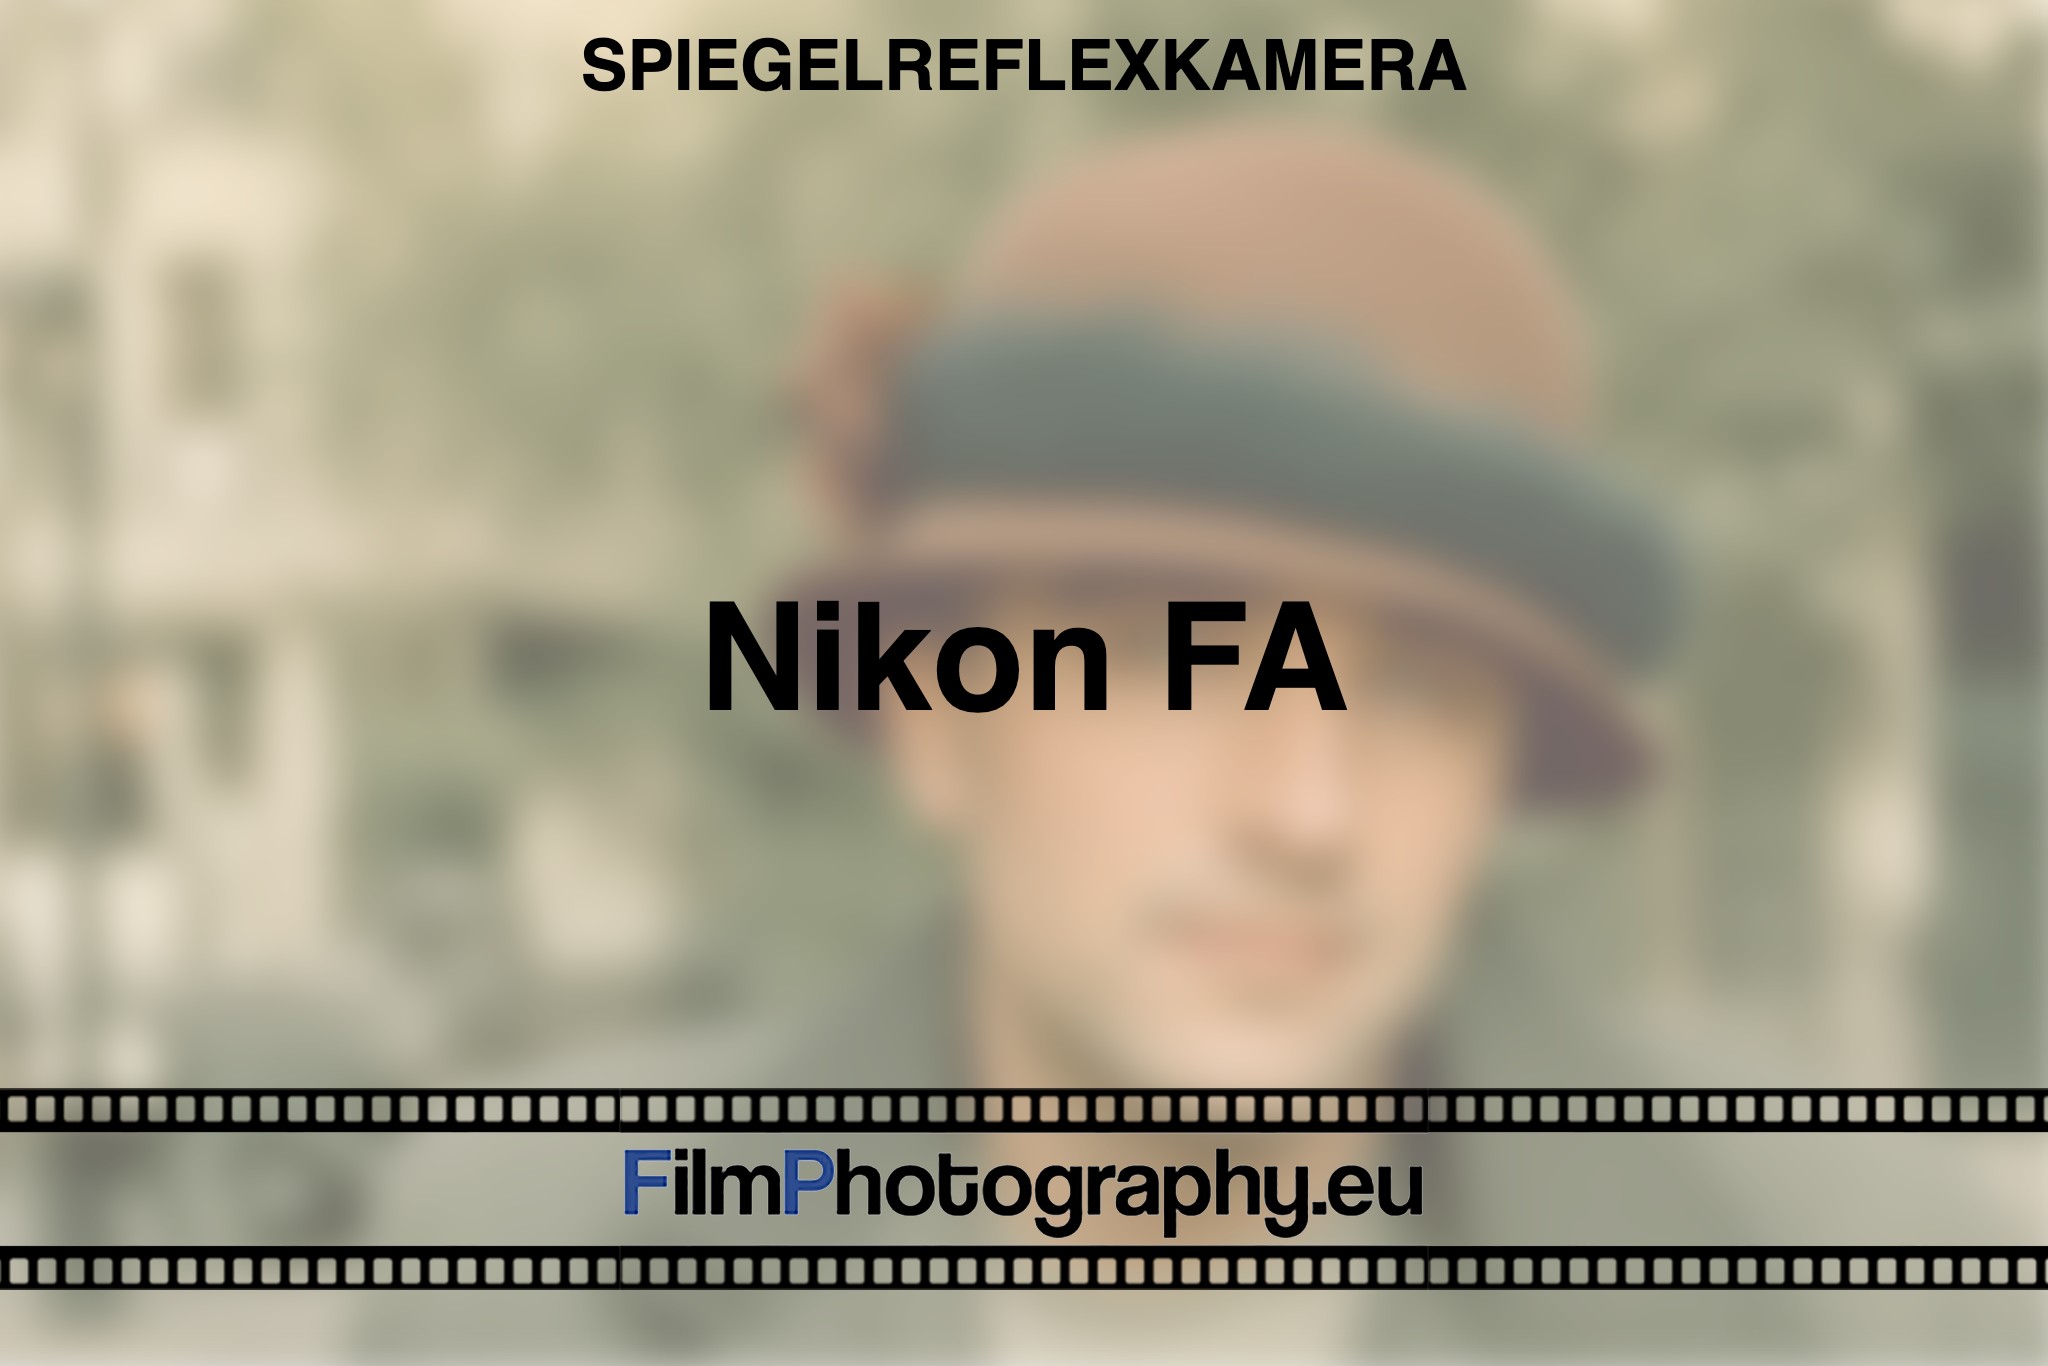 nikon-fa-spiegelreflexkamera-bnv